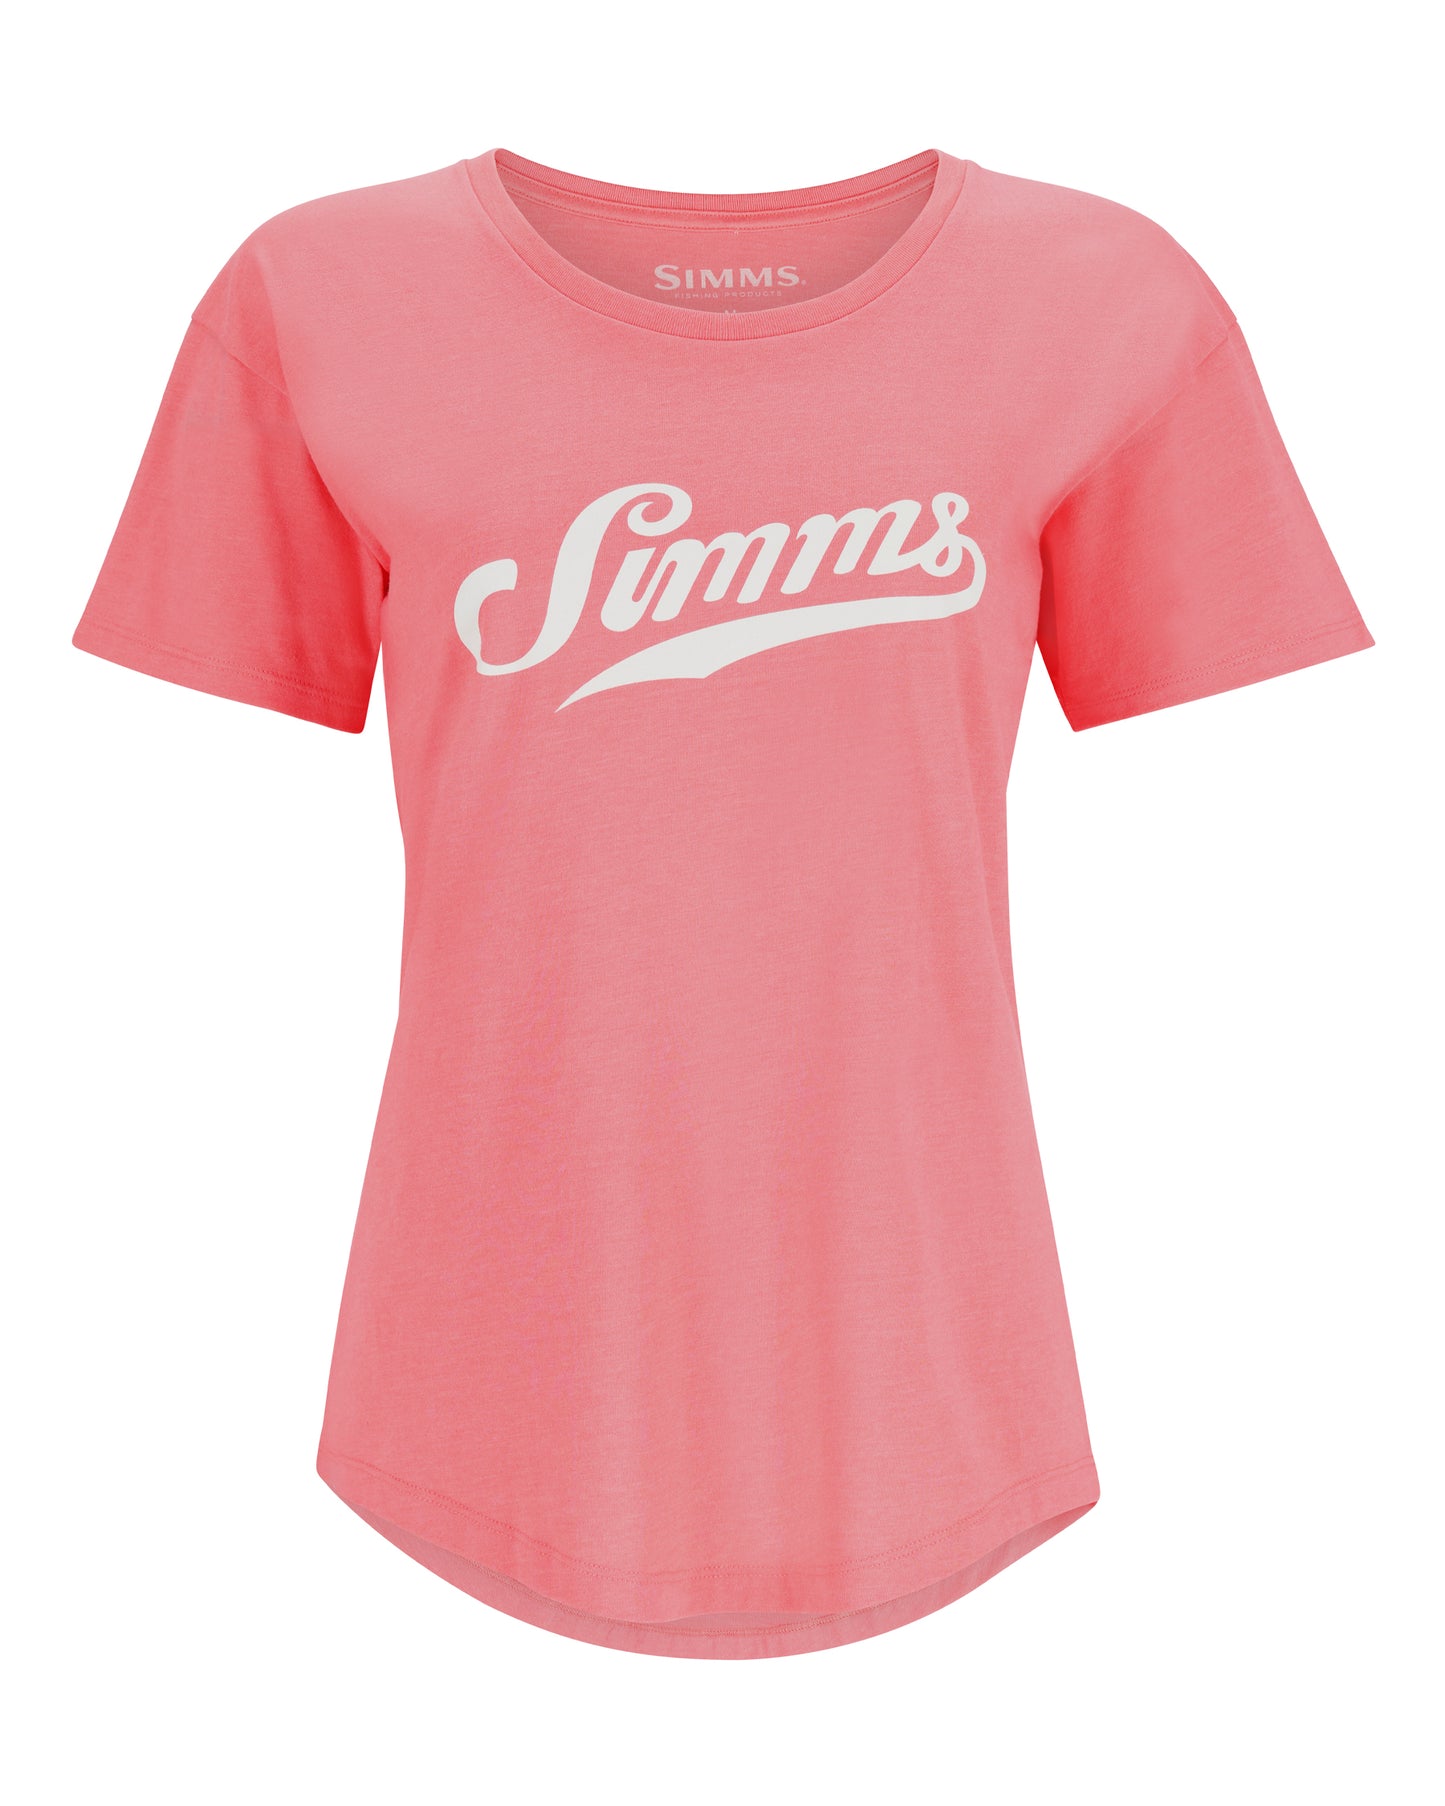    13819-690-simms-script-t-shirt-Mannequin-s23-front -rollover